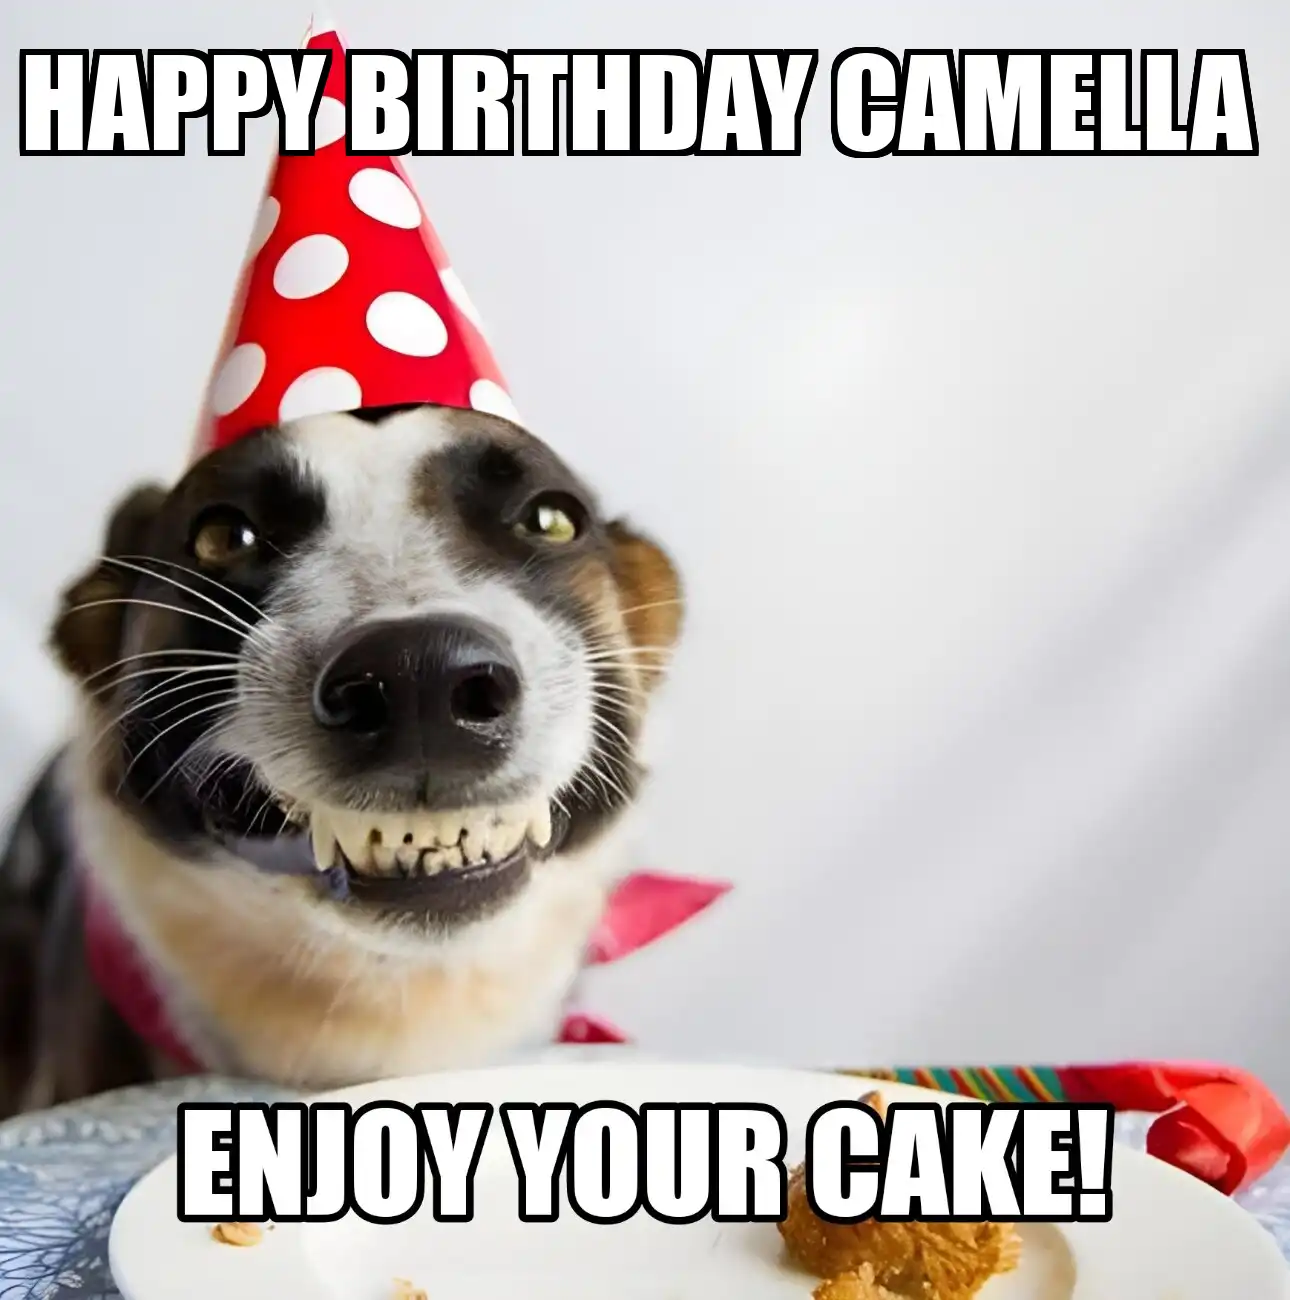 Happy Birthday Camella Enjoy Your Cake Dog Meme